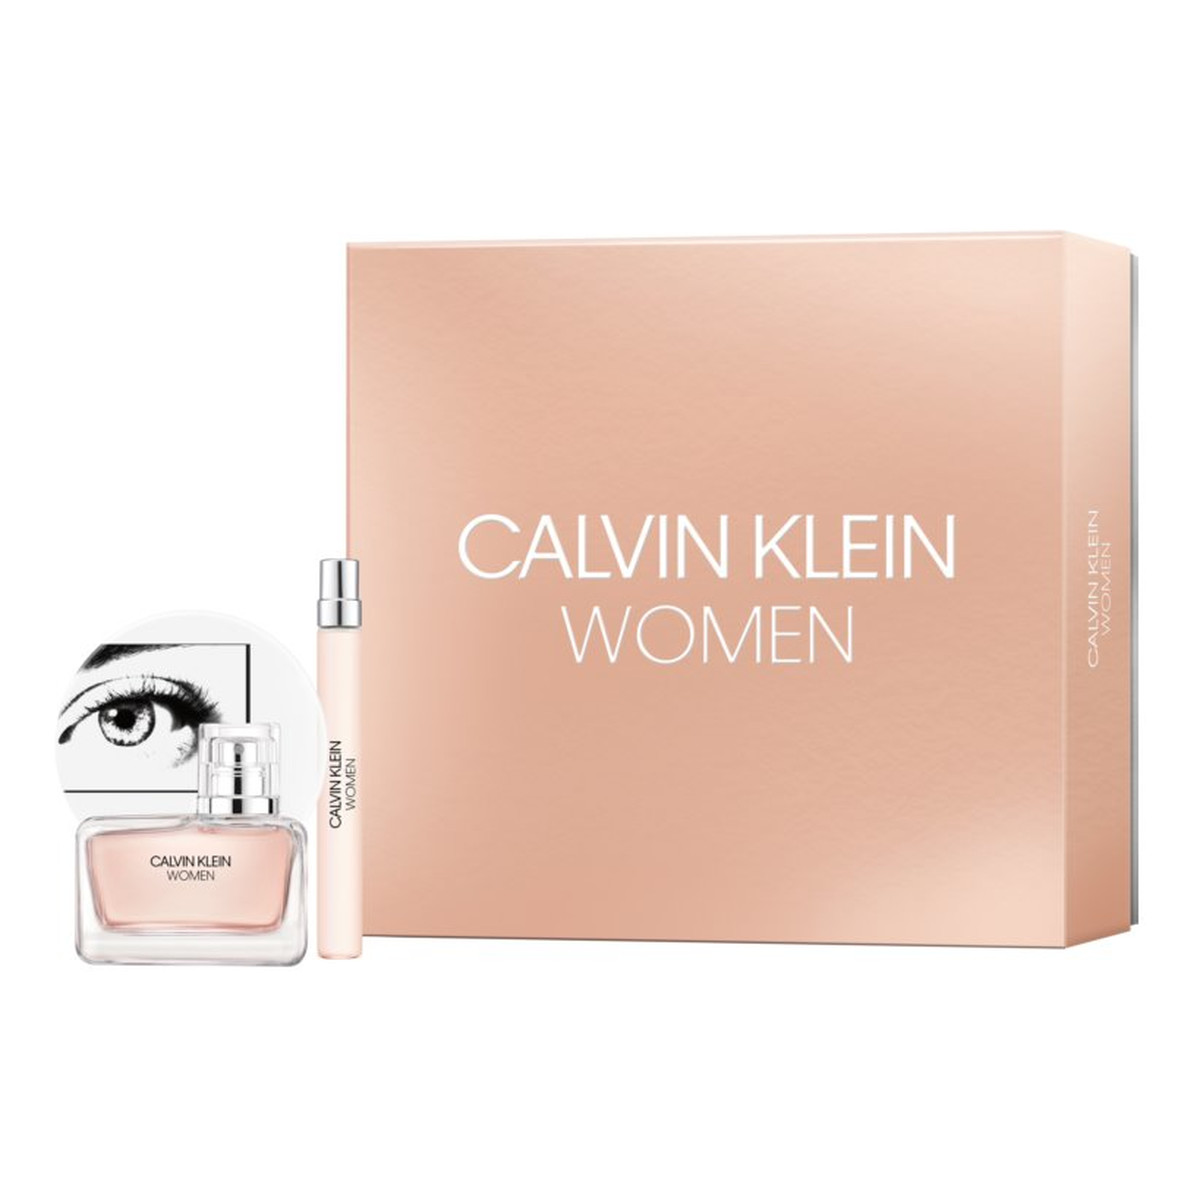 Calvin Klein Woman zestaw (woda perfumowana 50ml + woda perfumowana 10ml)